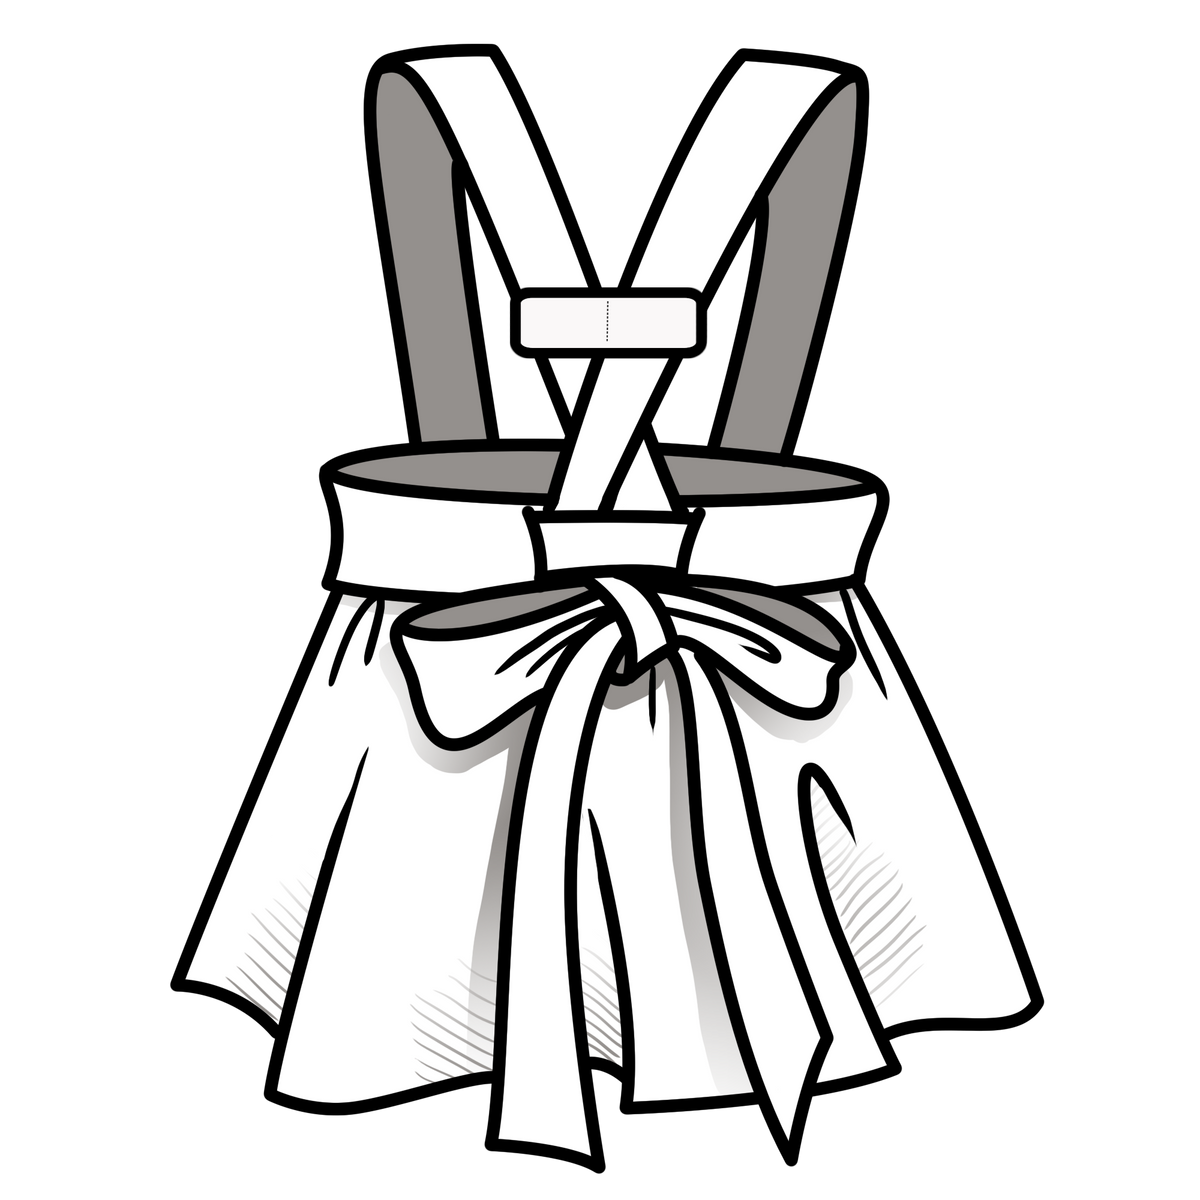 ‘Bunny’ Savannah Suspender Skirt - Aqua Reclaimed  - Ready to Ship